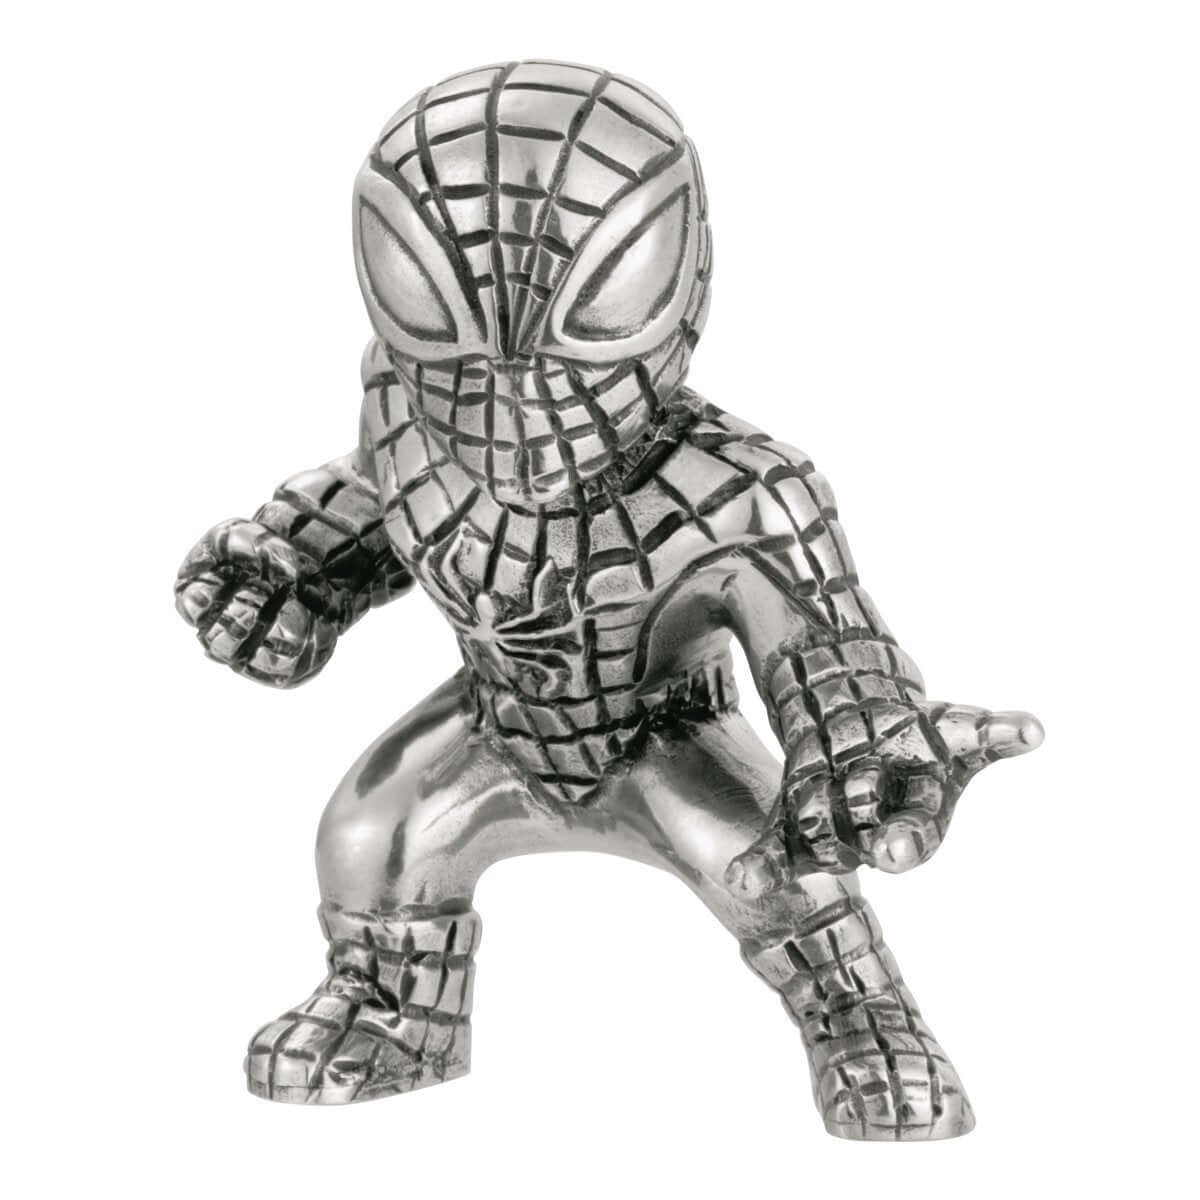 Spider-Man Miniature Figurine - Marvel Collectible gift